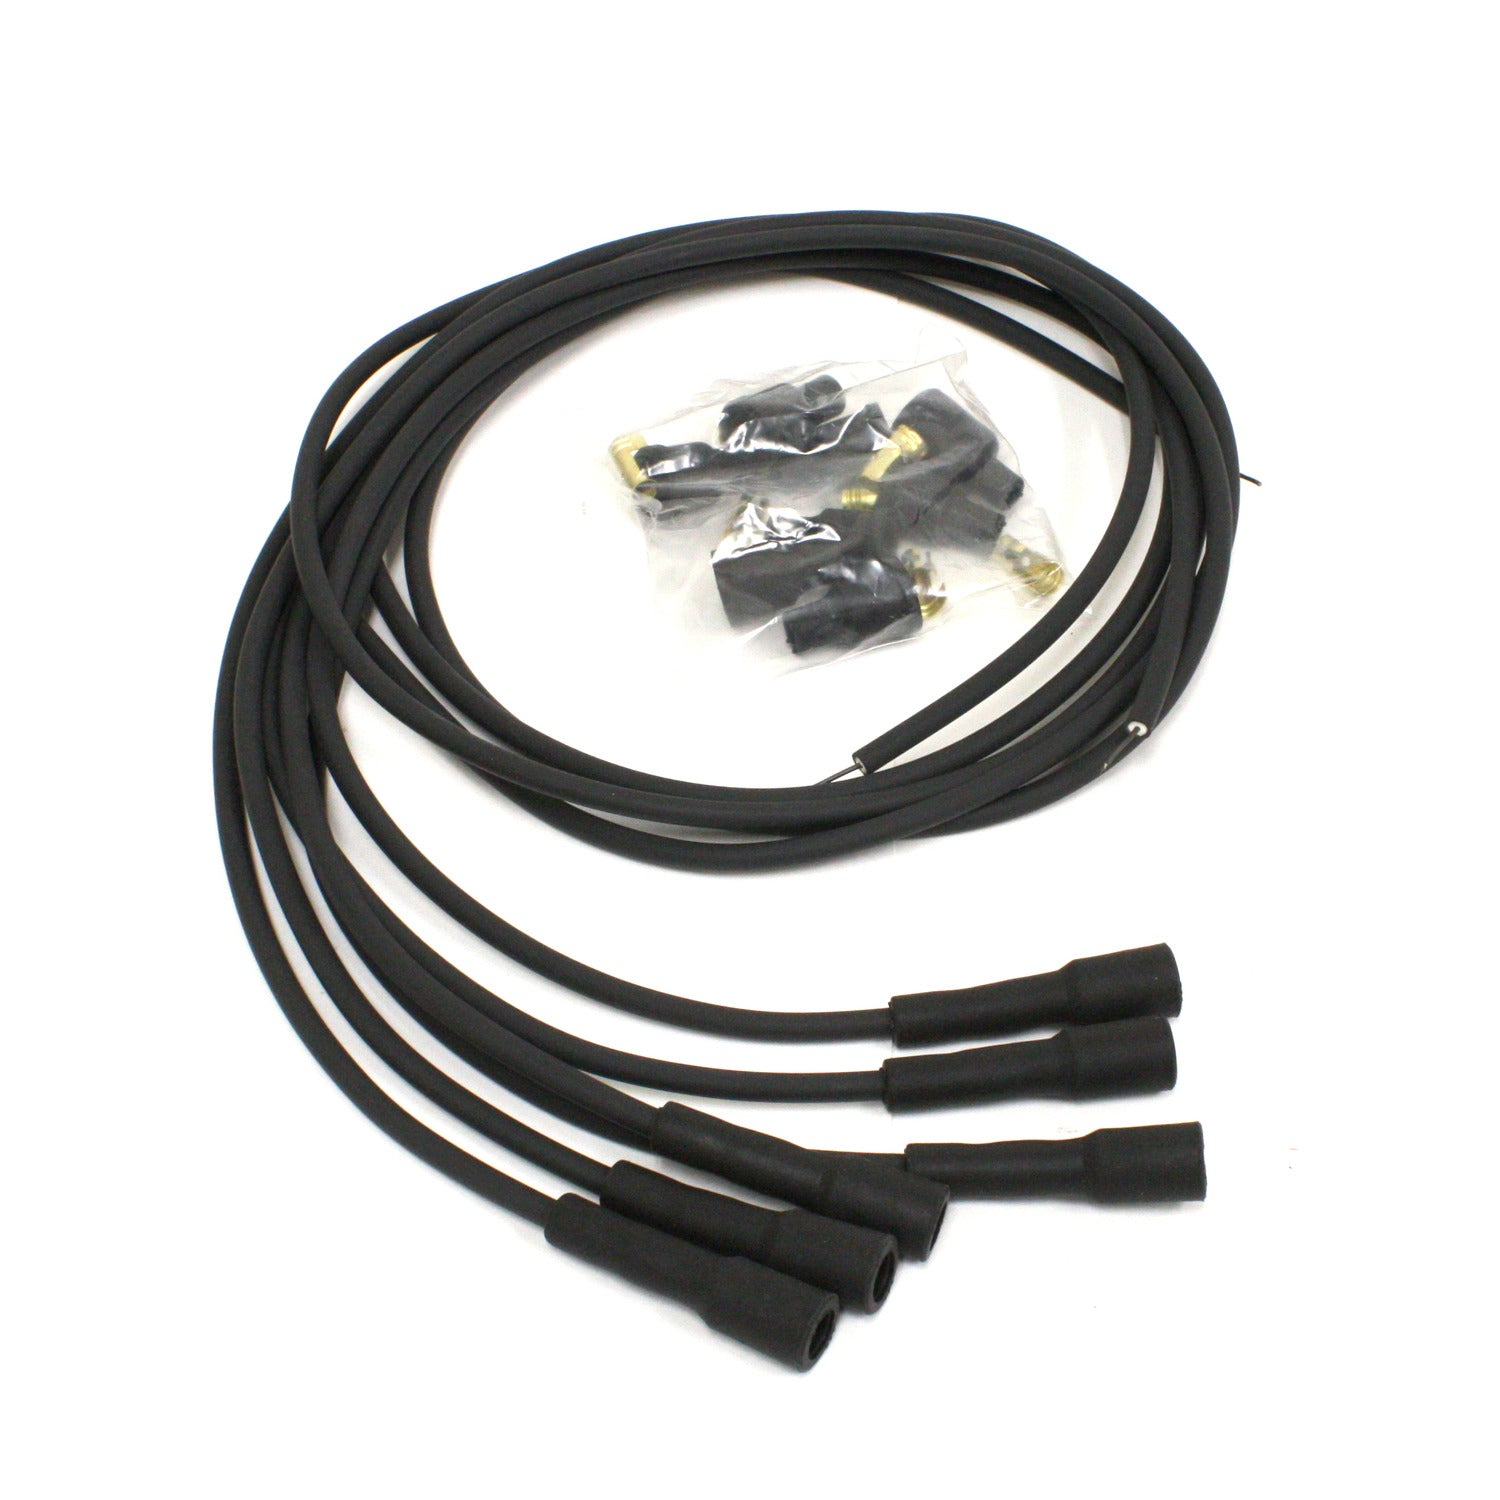 PerTronix 706180 Flame-Thrower Spark Plug Wires 6 cyl British Universal 180 Degree Black